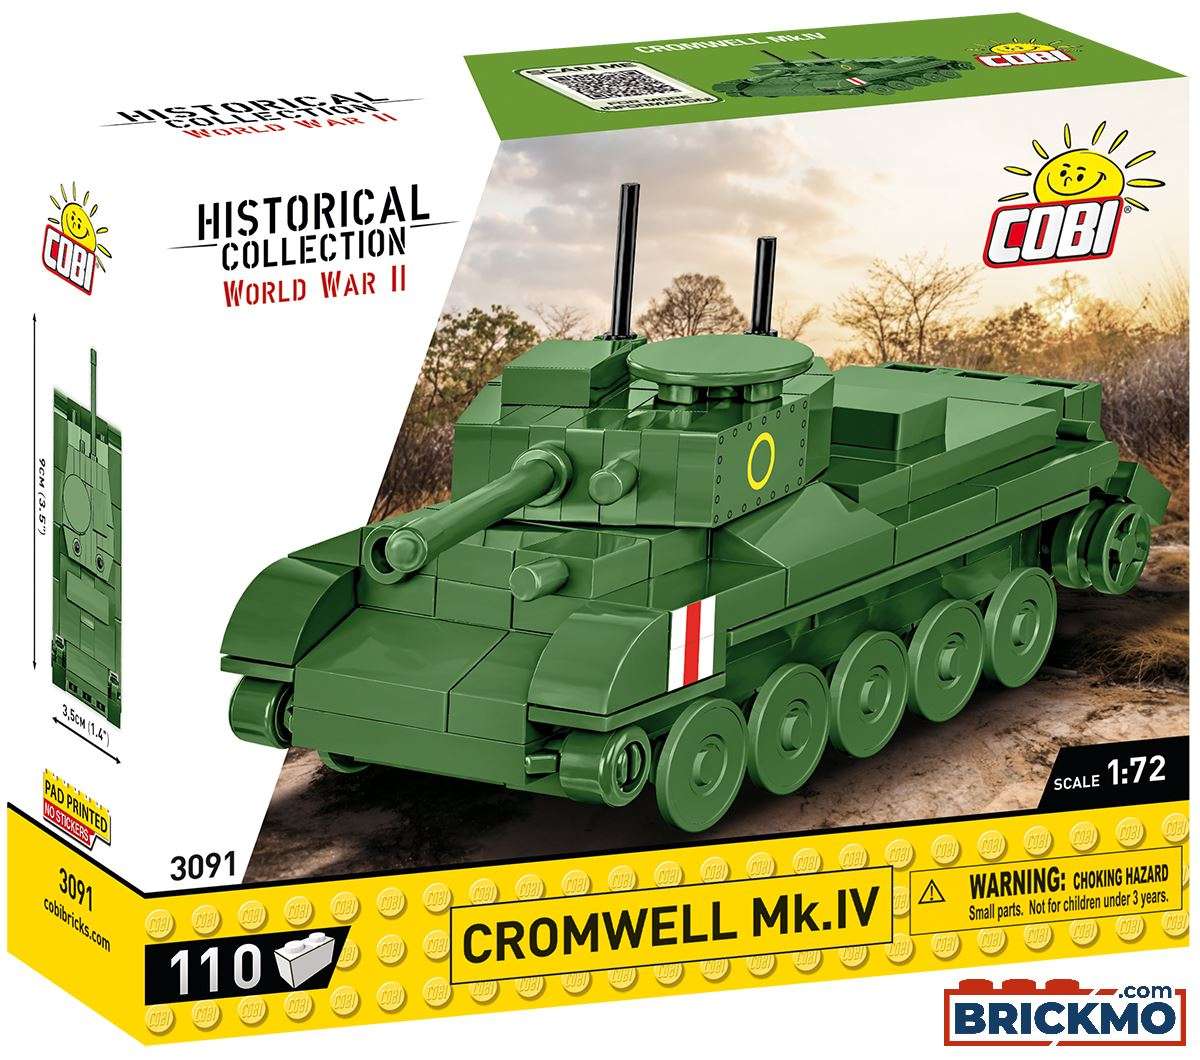 Cobi Historical Collection World War II 3091 Cromwell MK.IV 3091